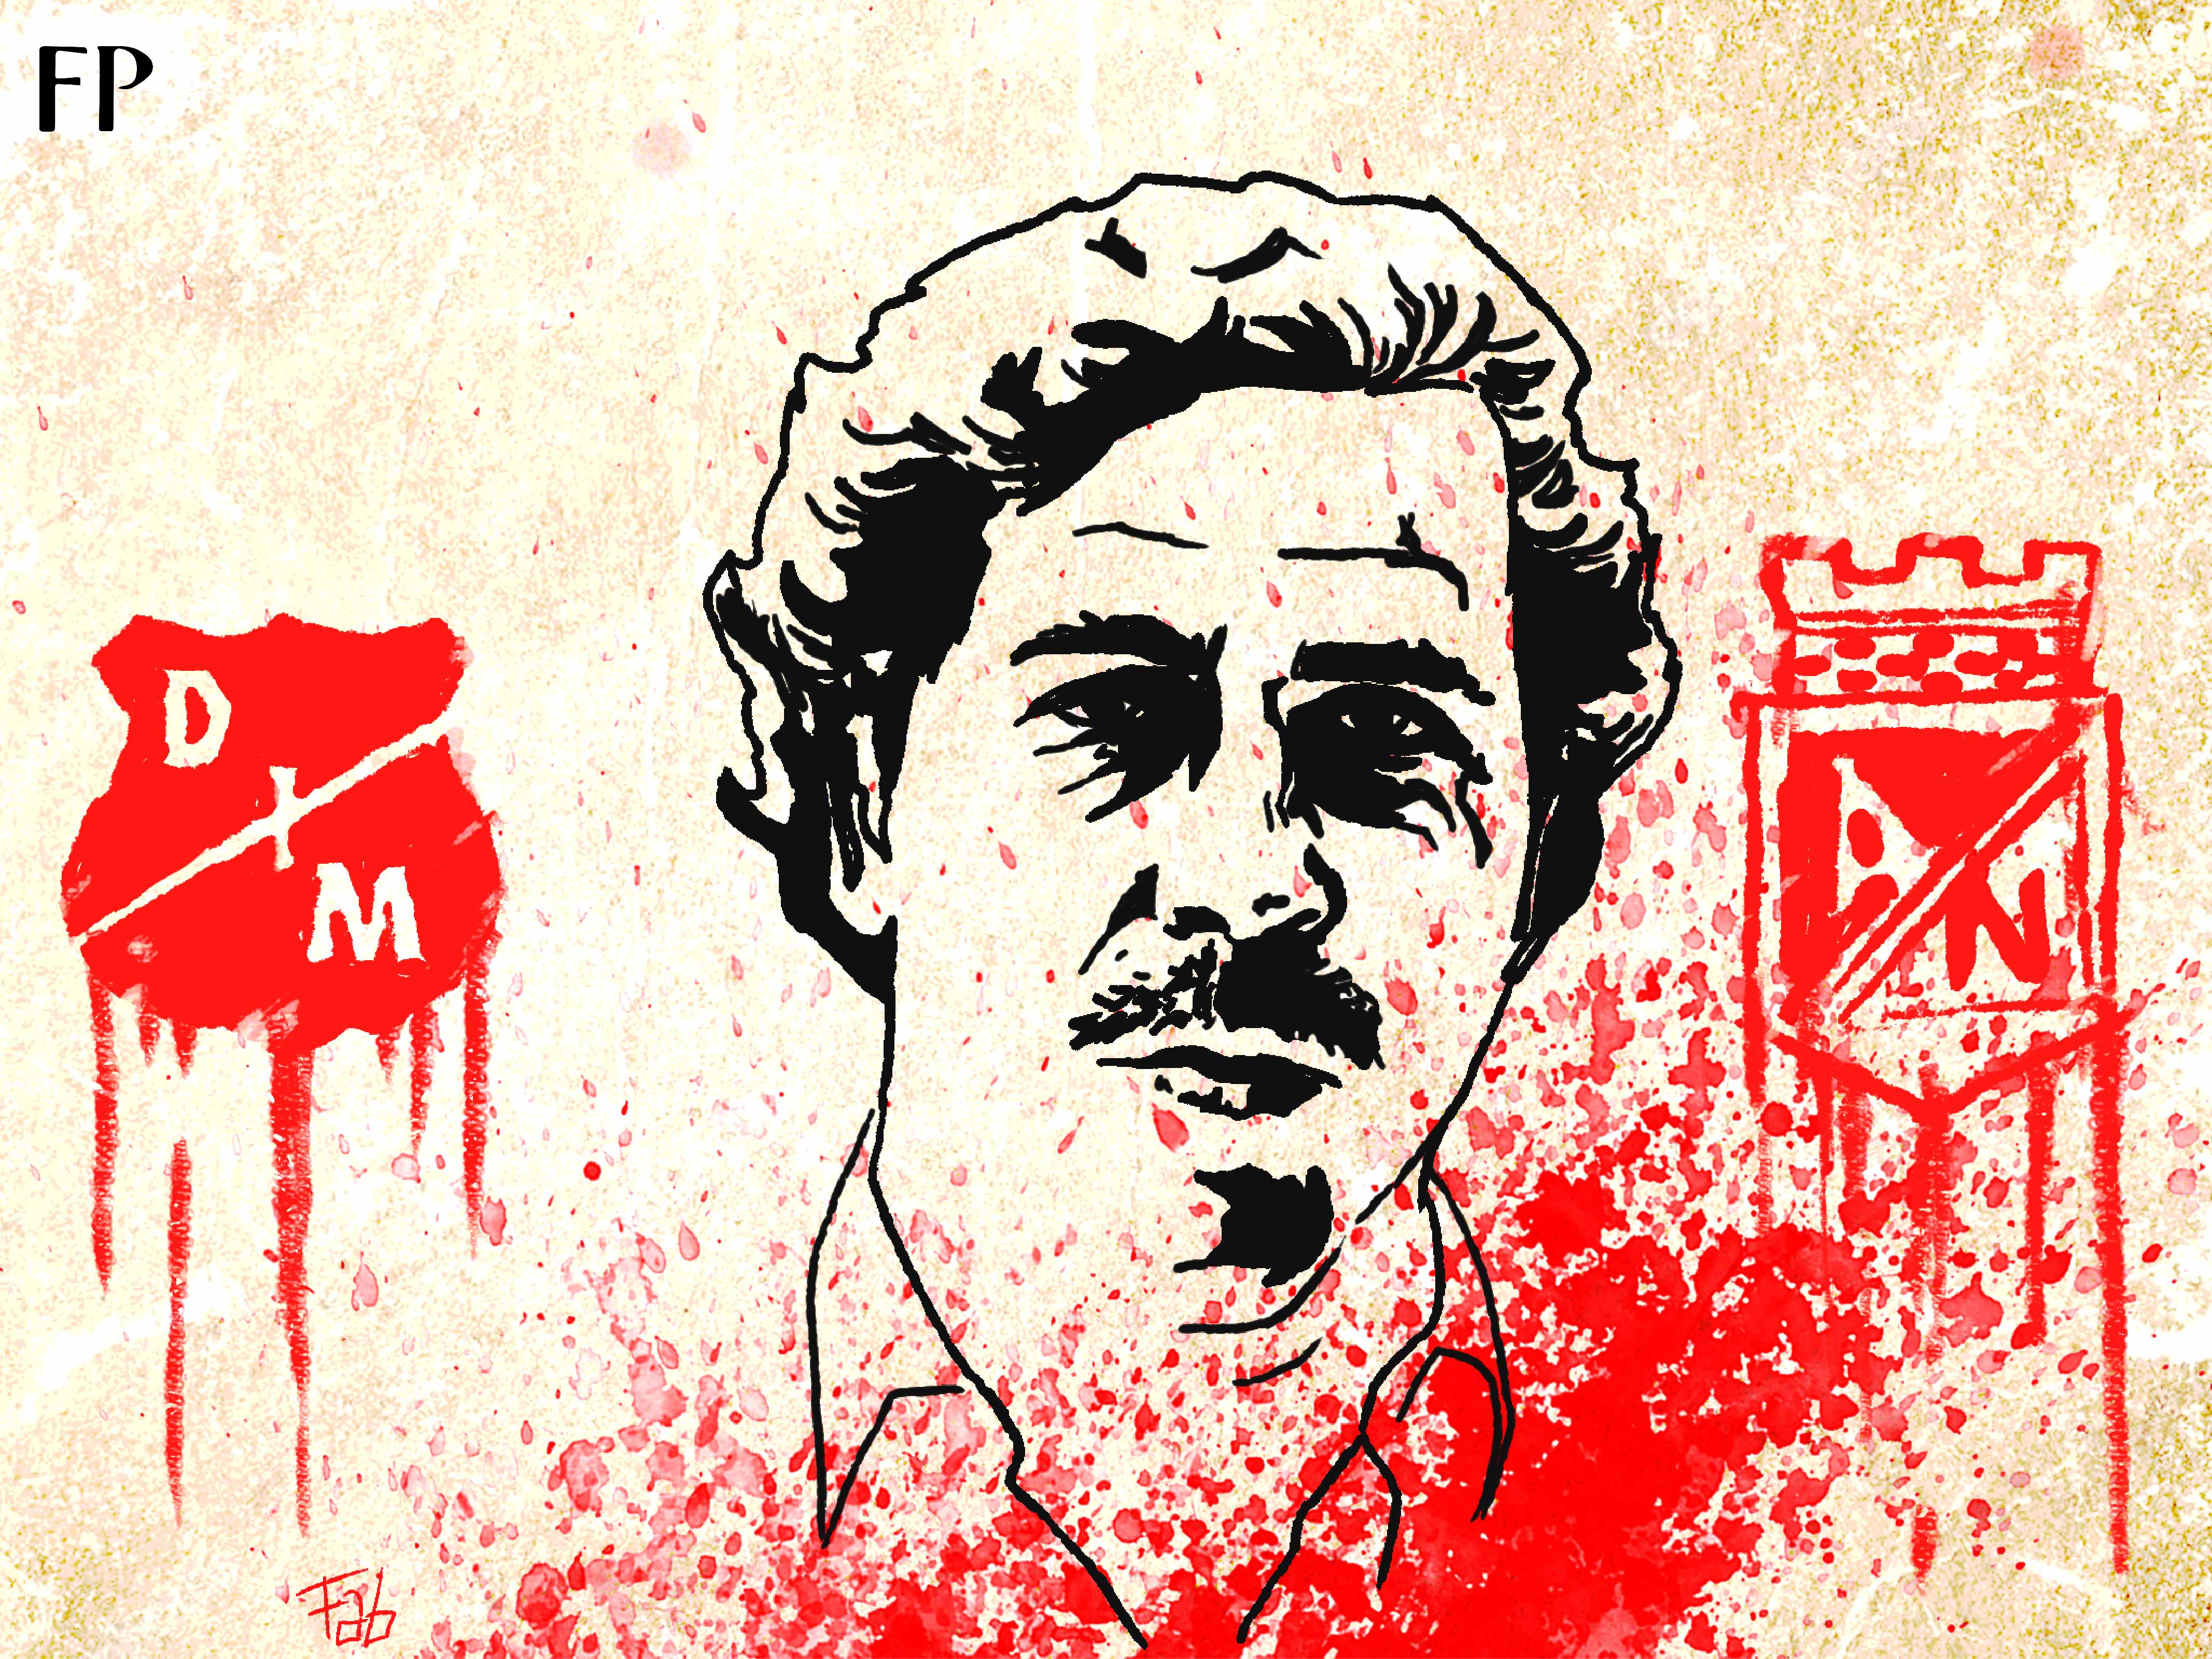 Medellin Adventures - The shadow of Pablo Escobar over Colombia football